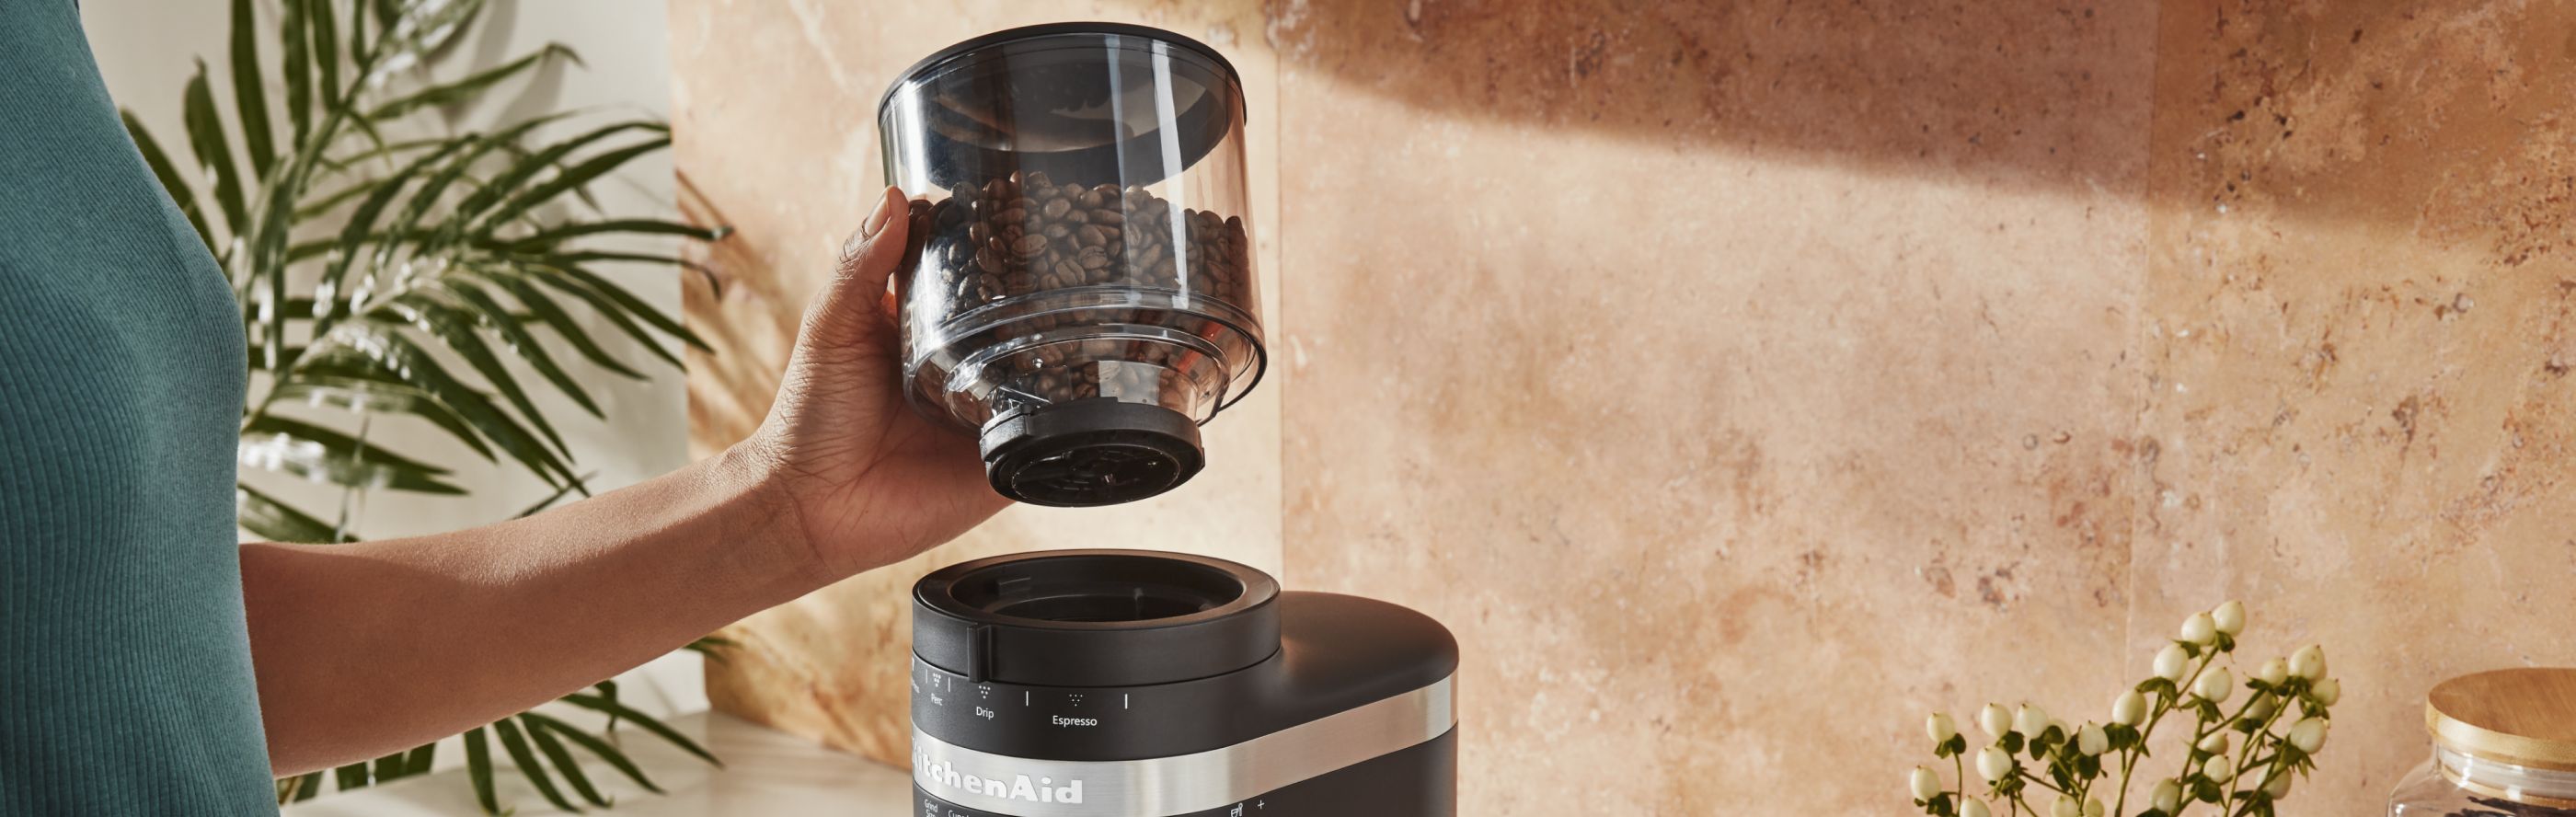 KitchenAid® burr grinder full of coffee beans